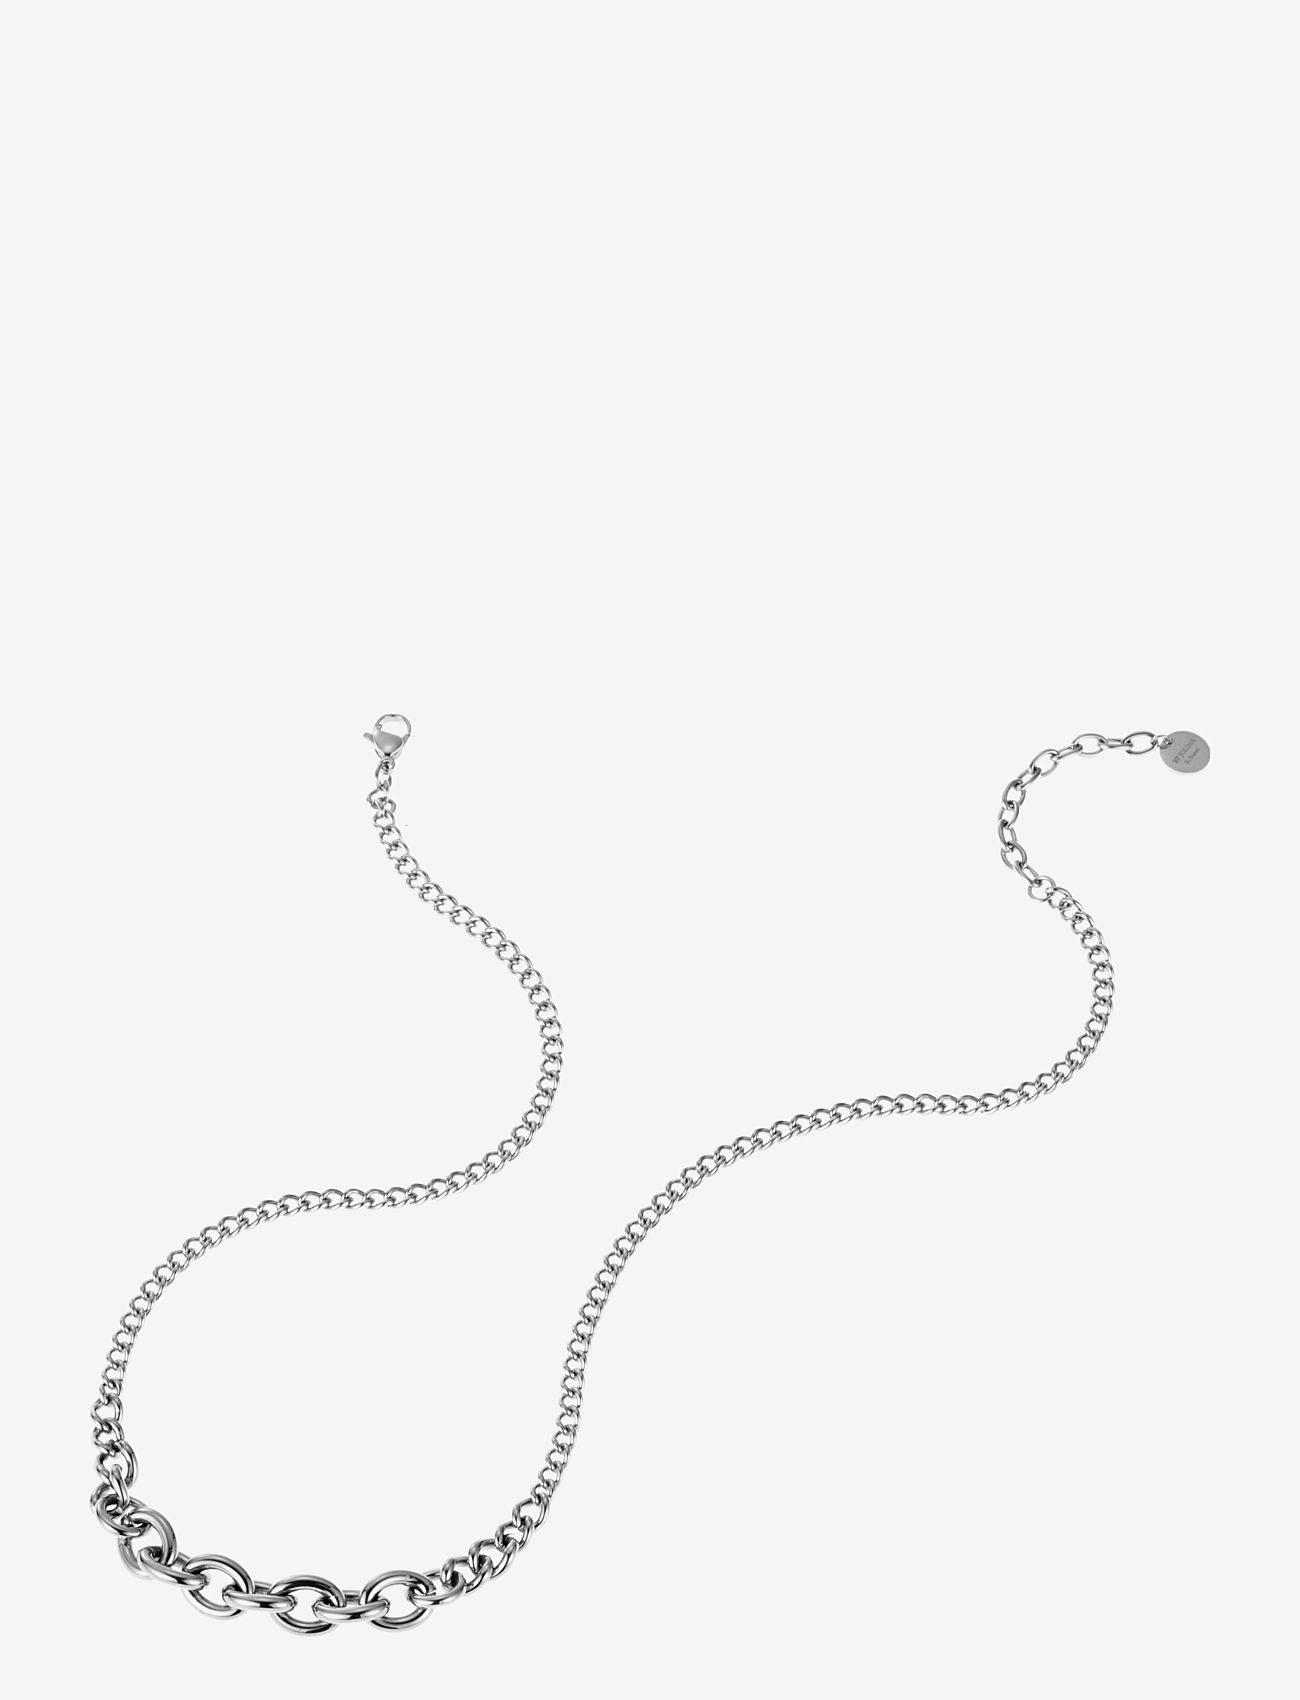 By Jolima - Ruby necklace, steel - silver - 1